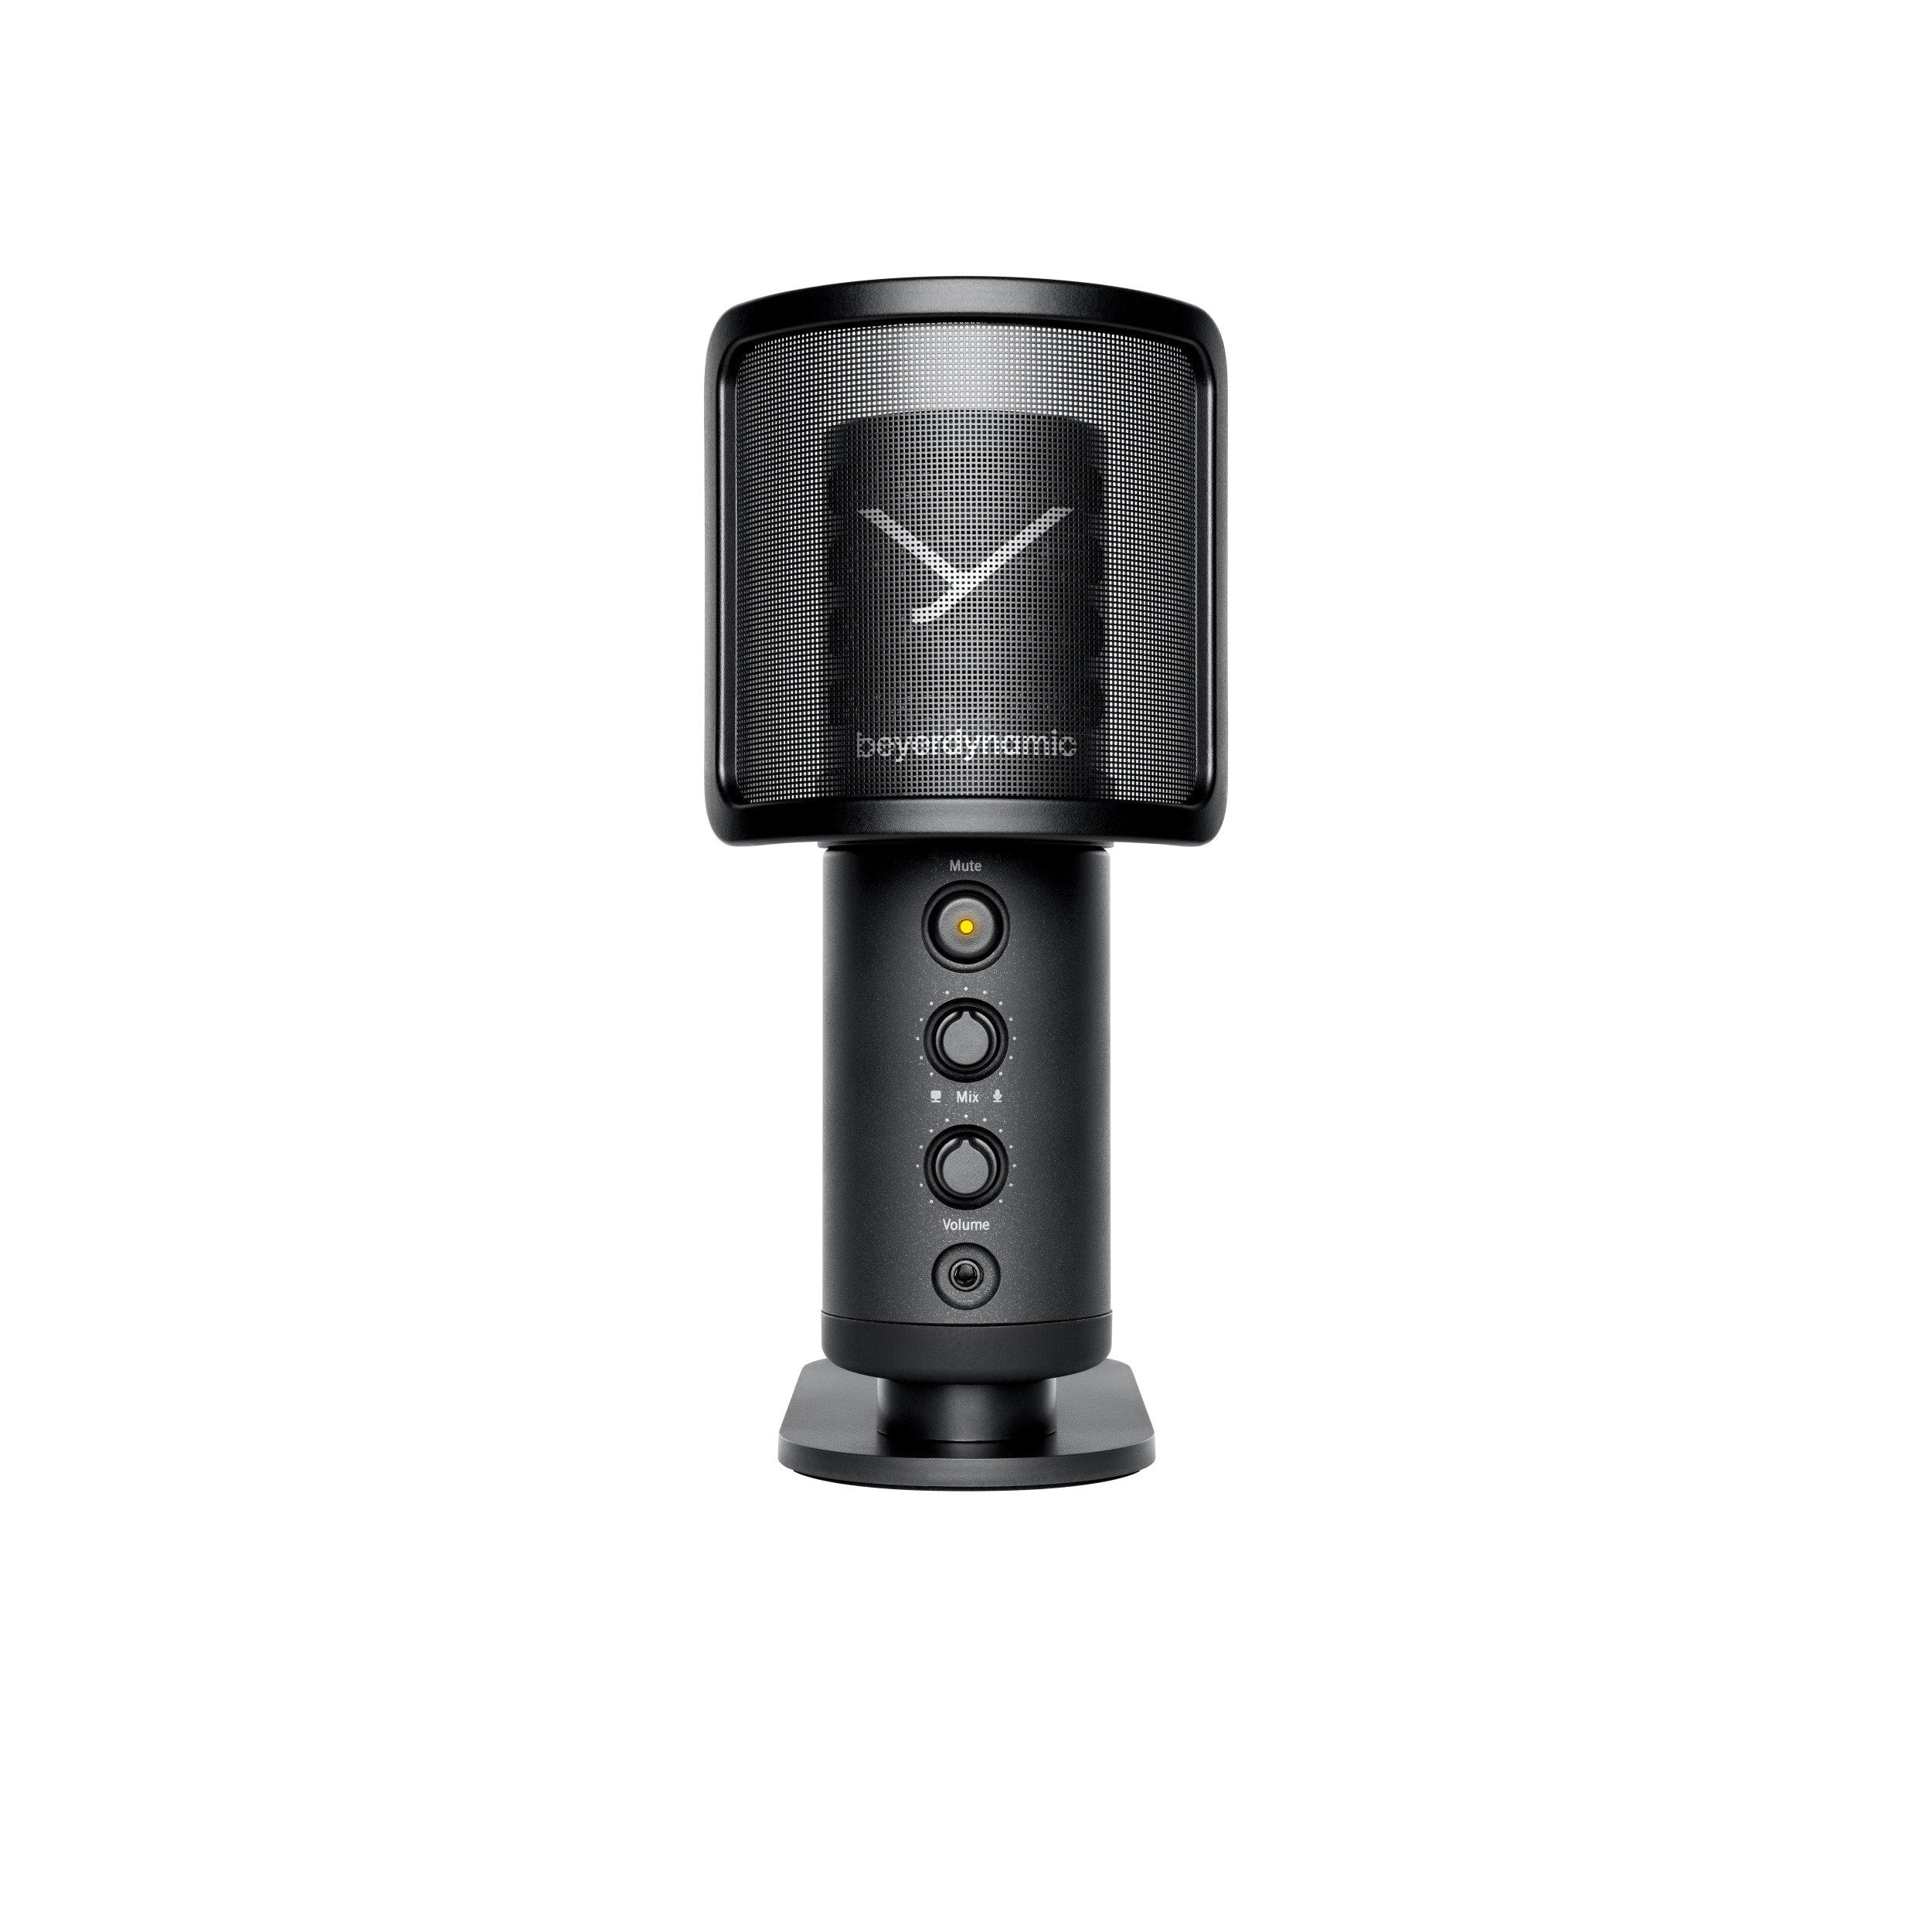 Beyerdynamic Creator 24 - DT 240 Pro with Fox USB Microphone